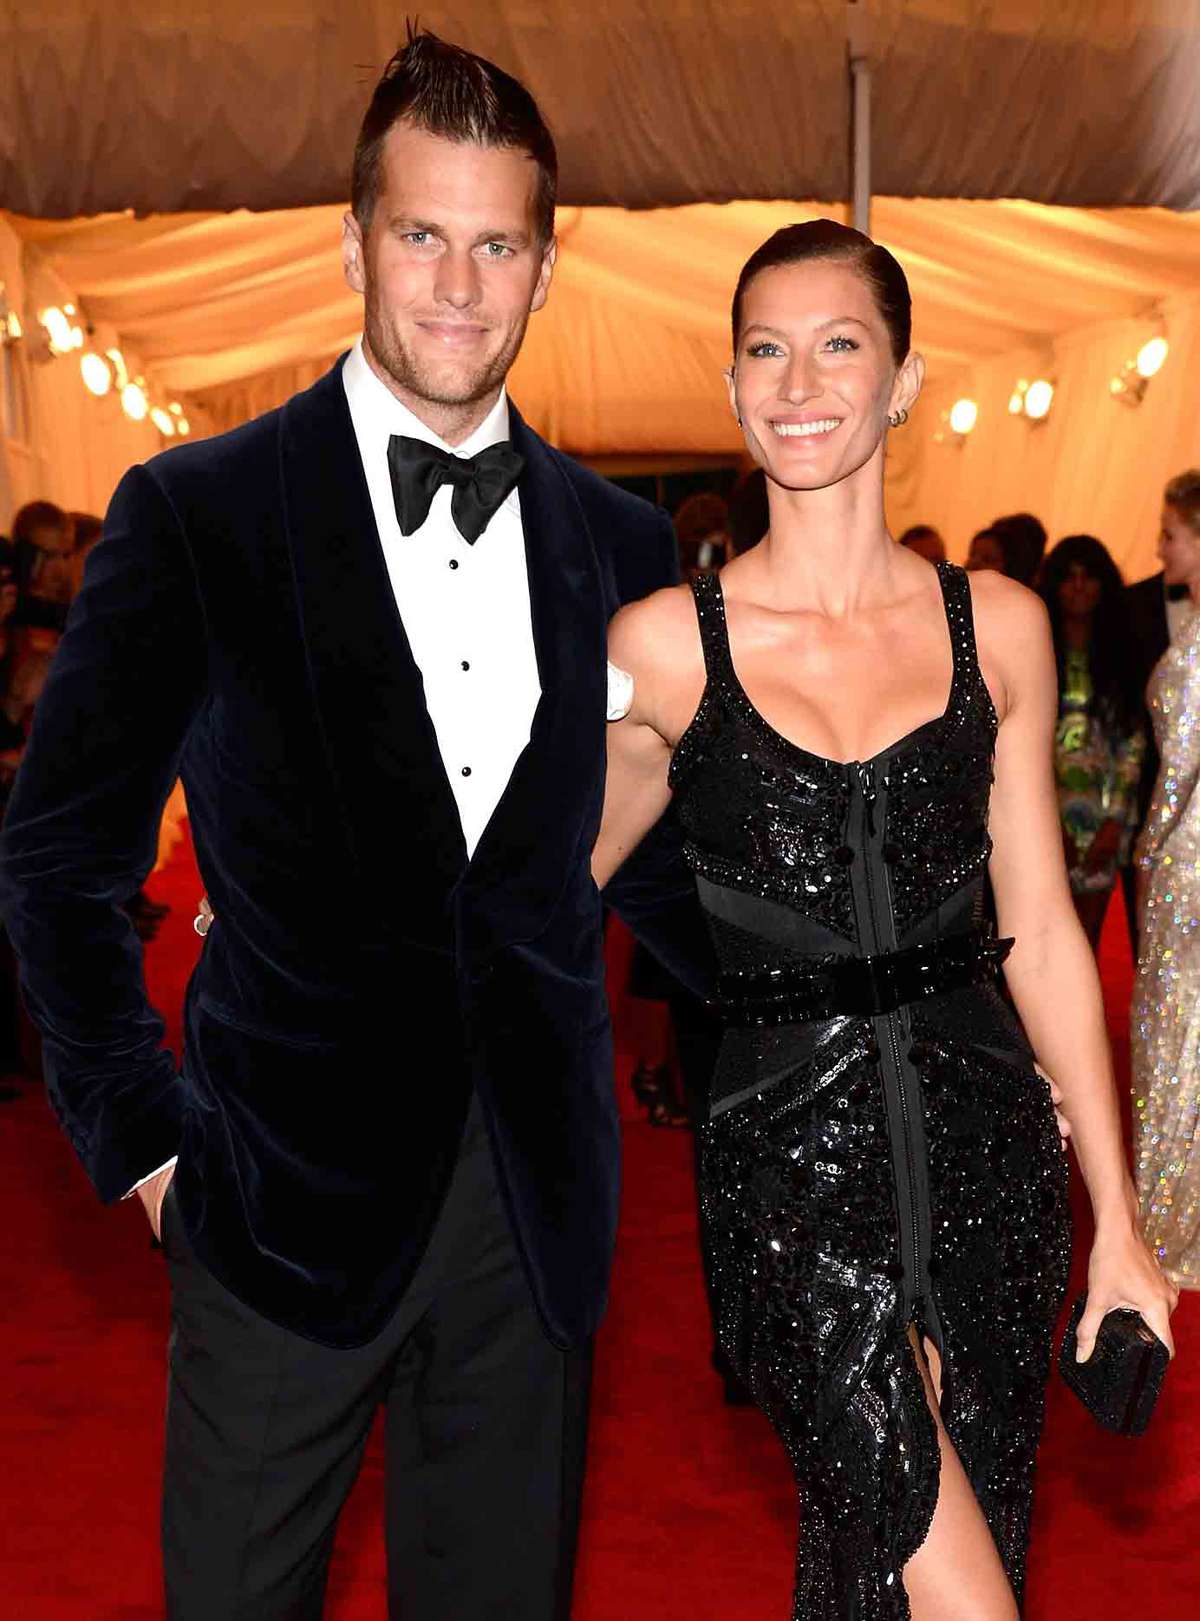 Renewed Vows - Tom Brady and Gisele Bundchen